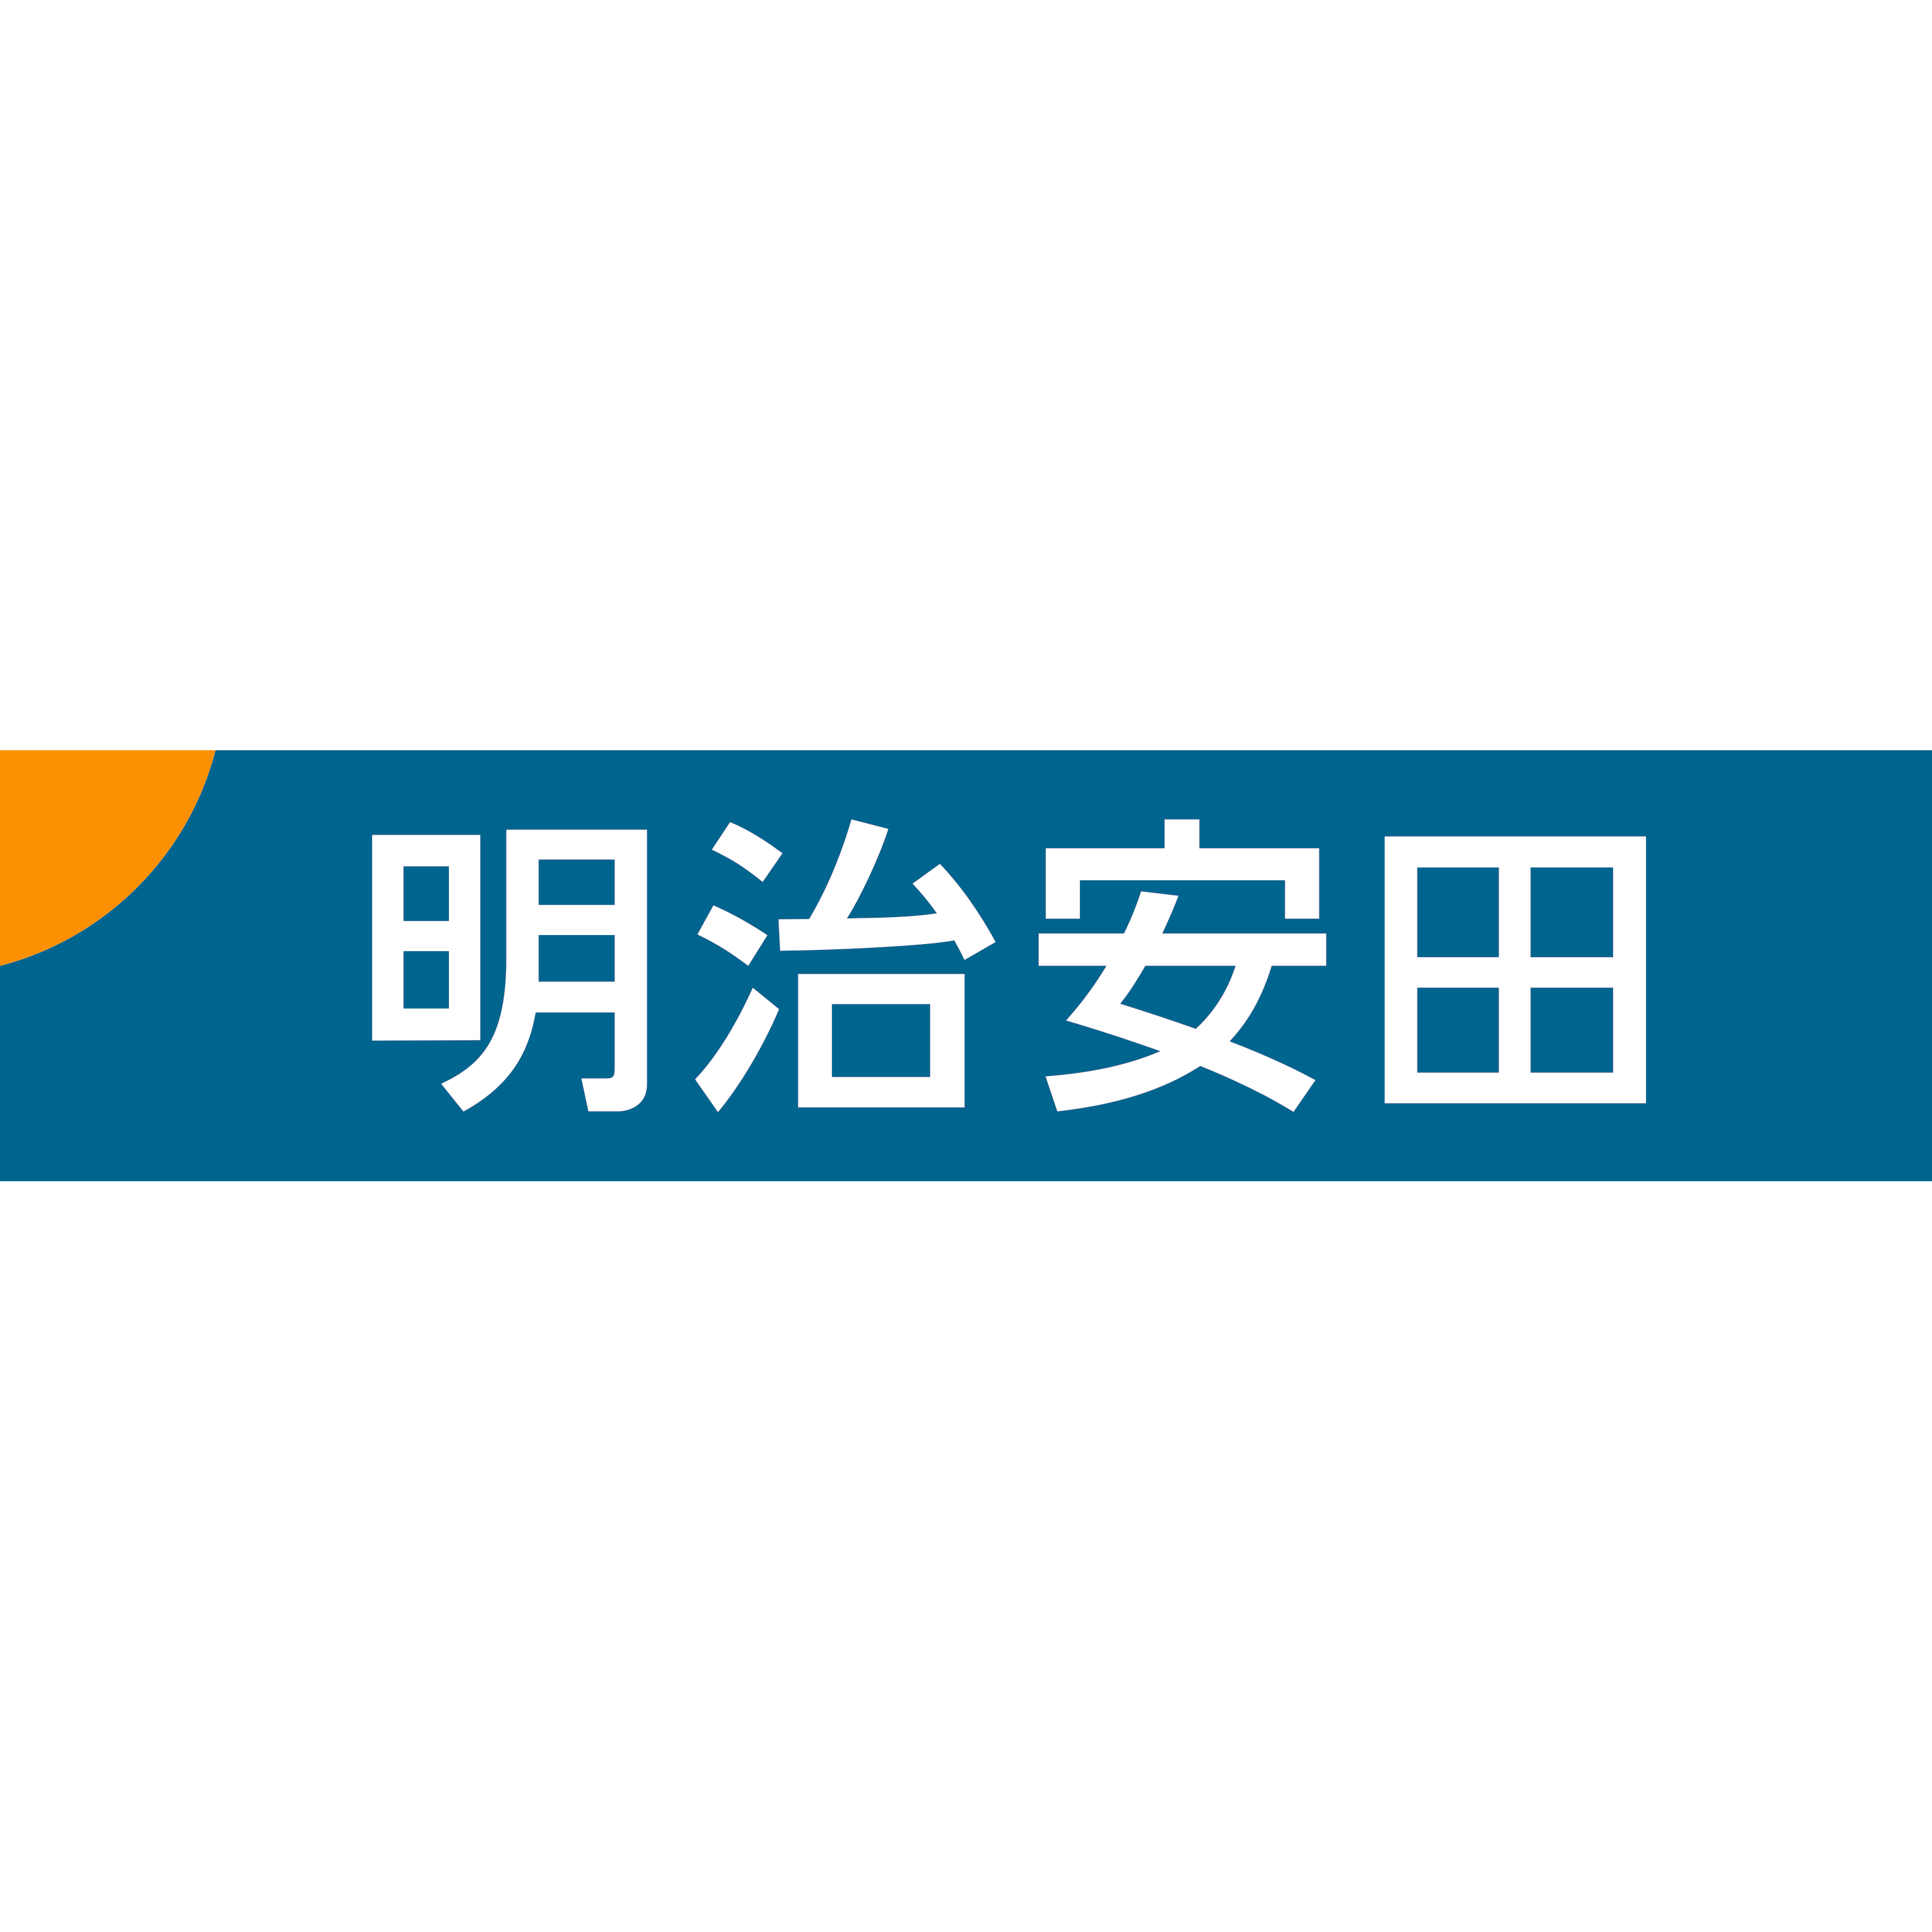 Meiji Yasuda Life Logo Transparent Picture